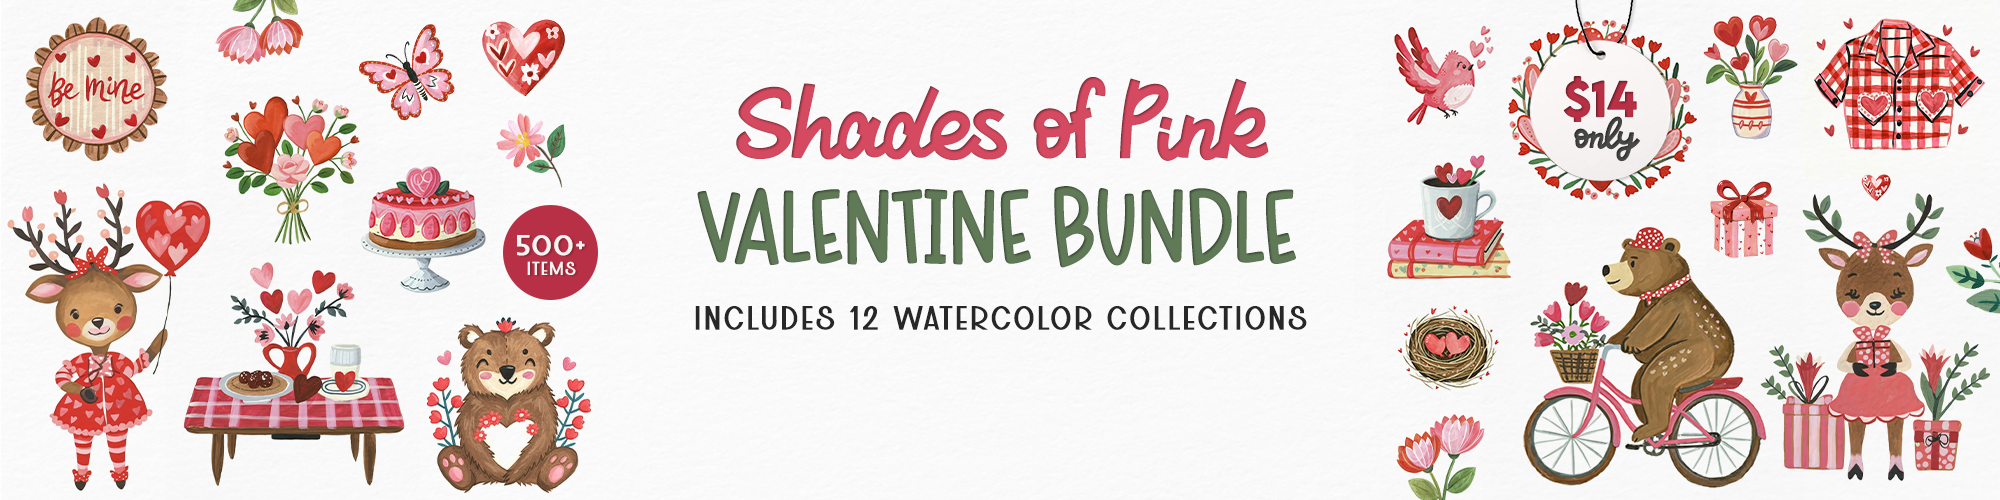 Shadows of pink valentine's bundle.